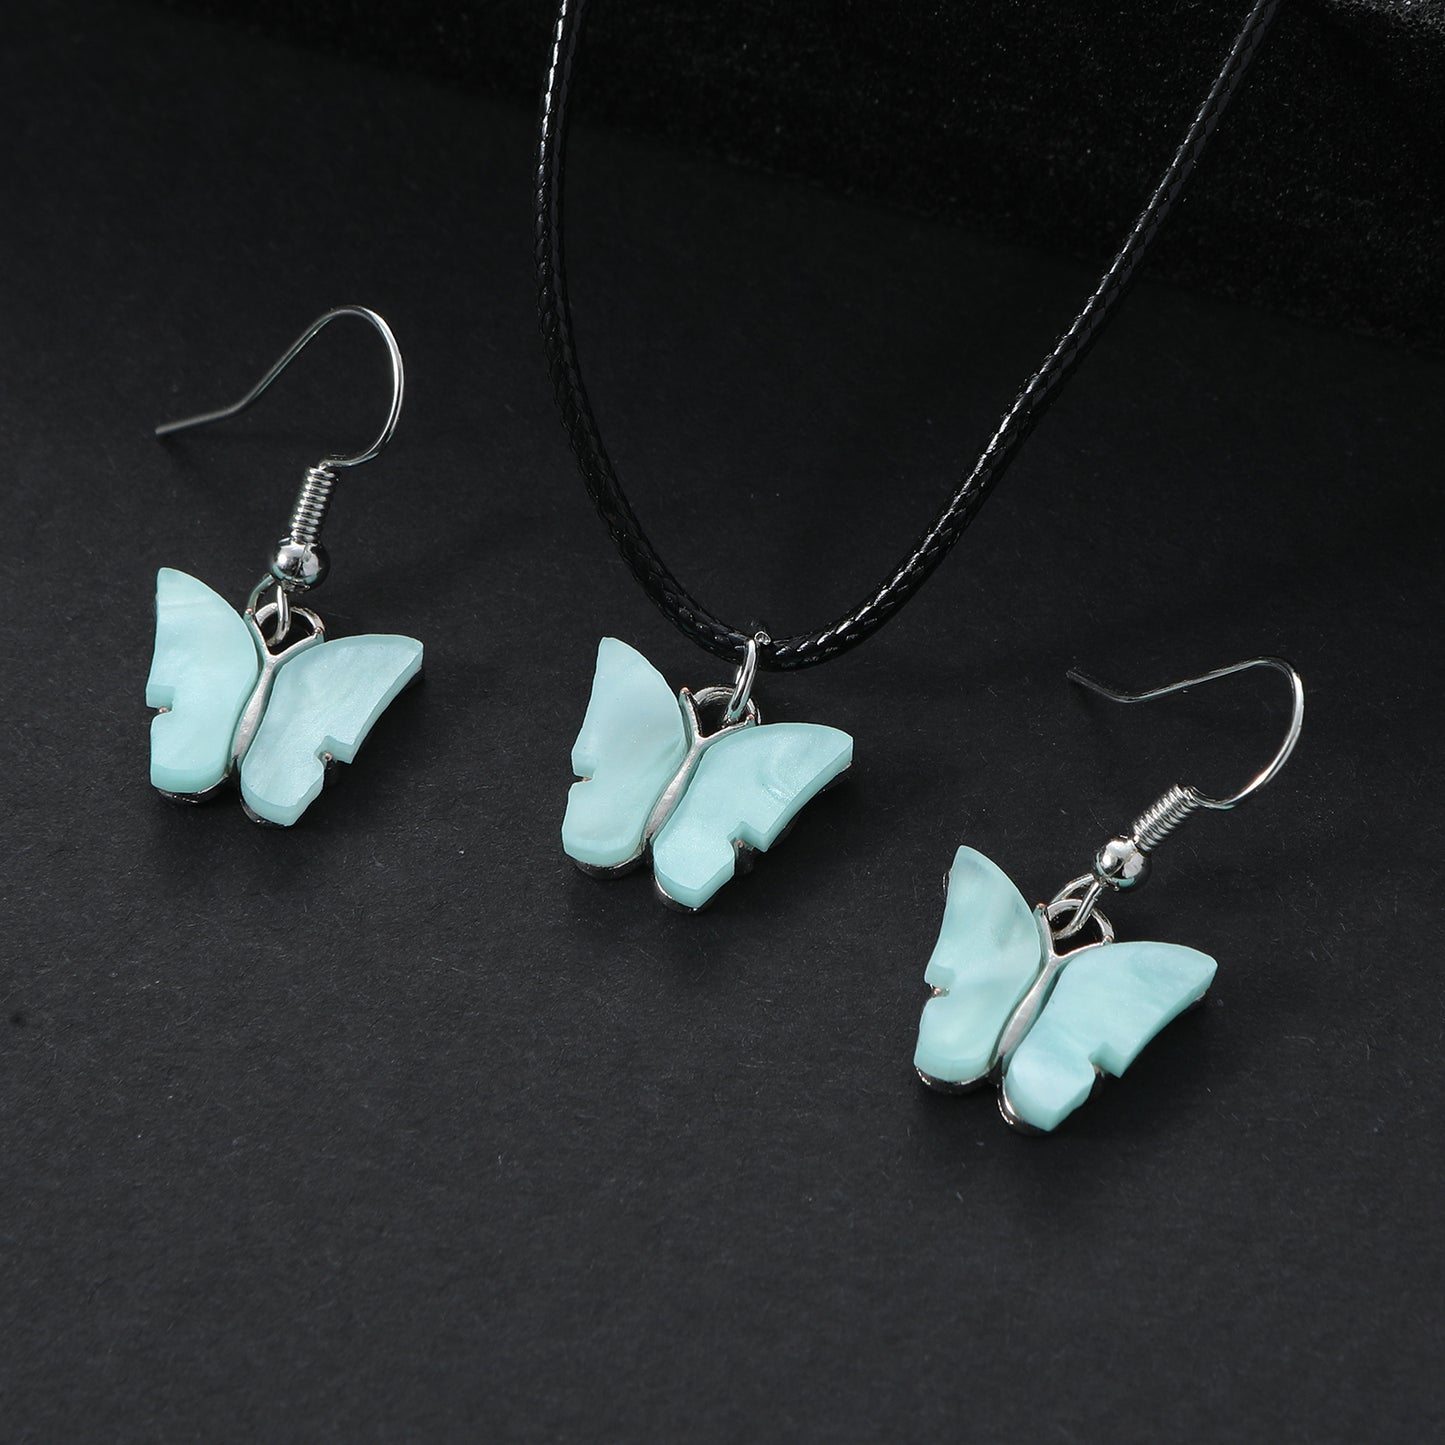 Simple Style Butterfly Alloy Women's Jewelry Set